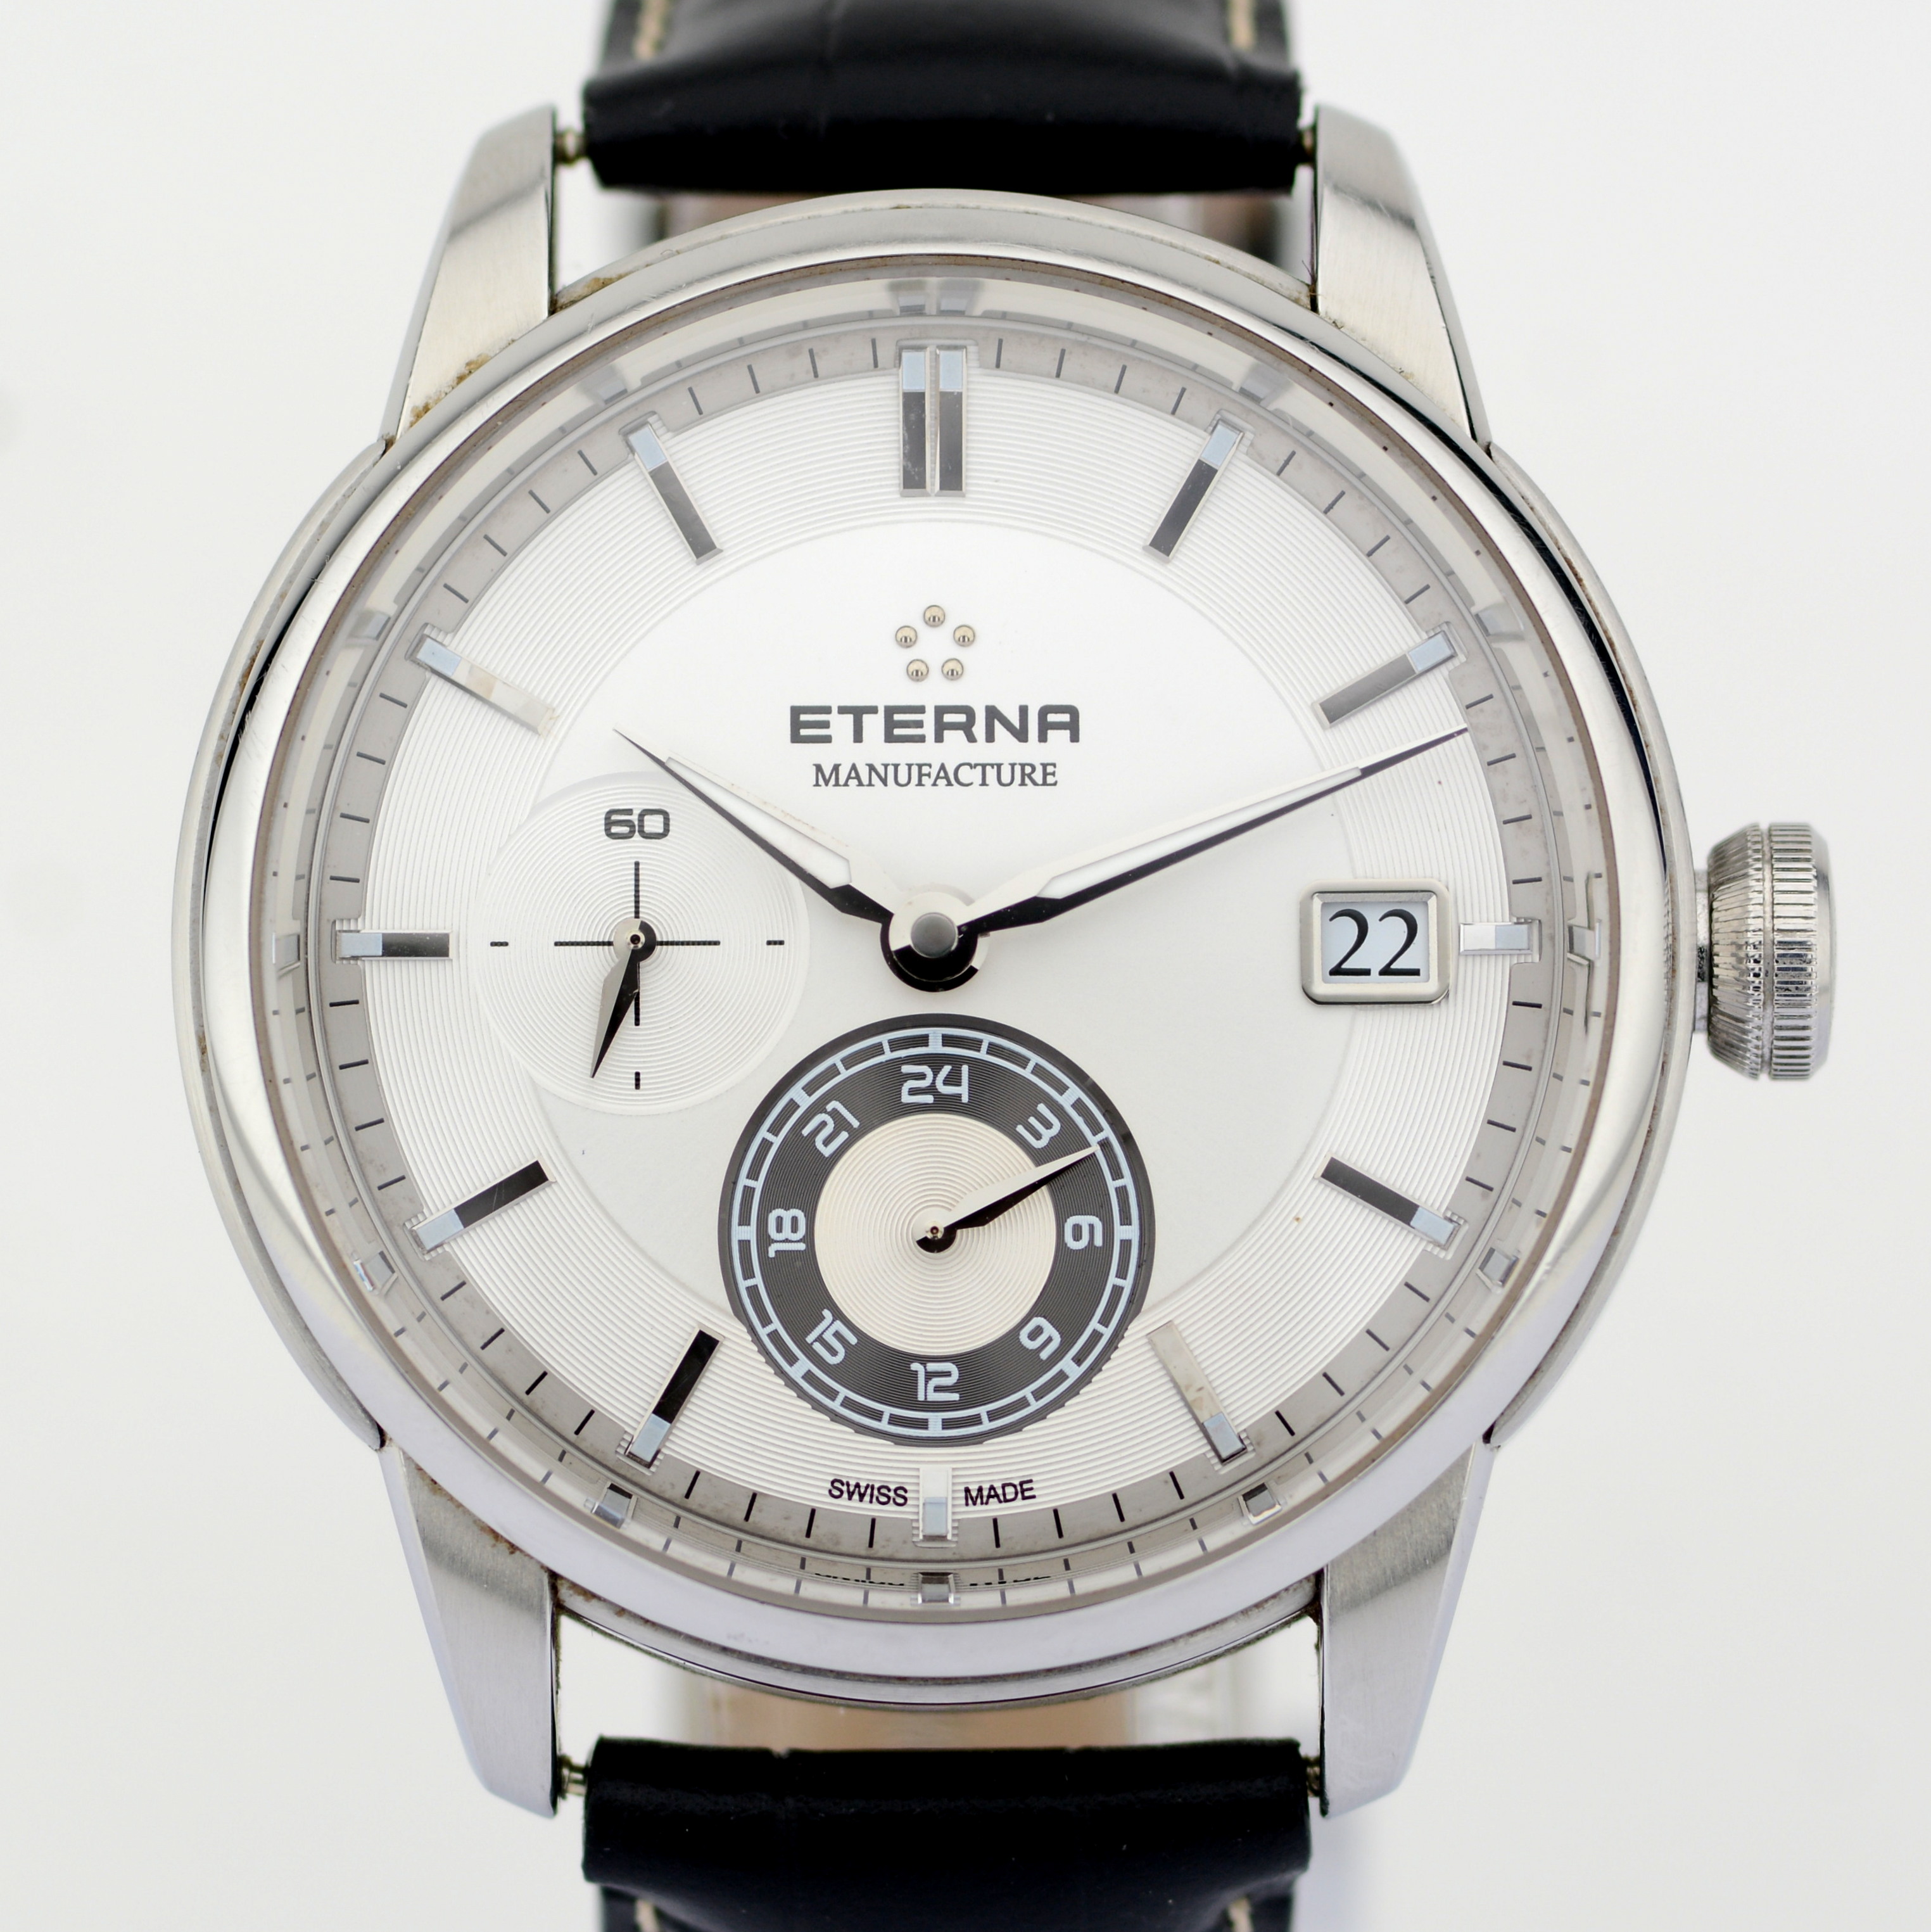 Eterna / Adventic GMT Manufacture Automatic Date - Gentlmen's Steel Wrist Watch